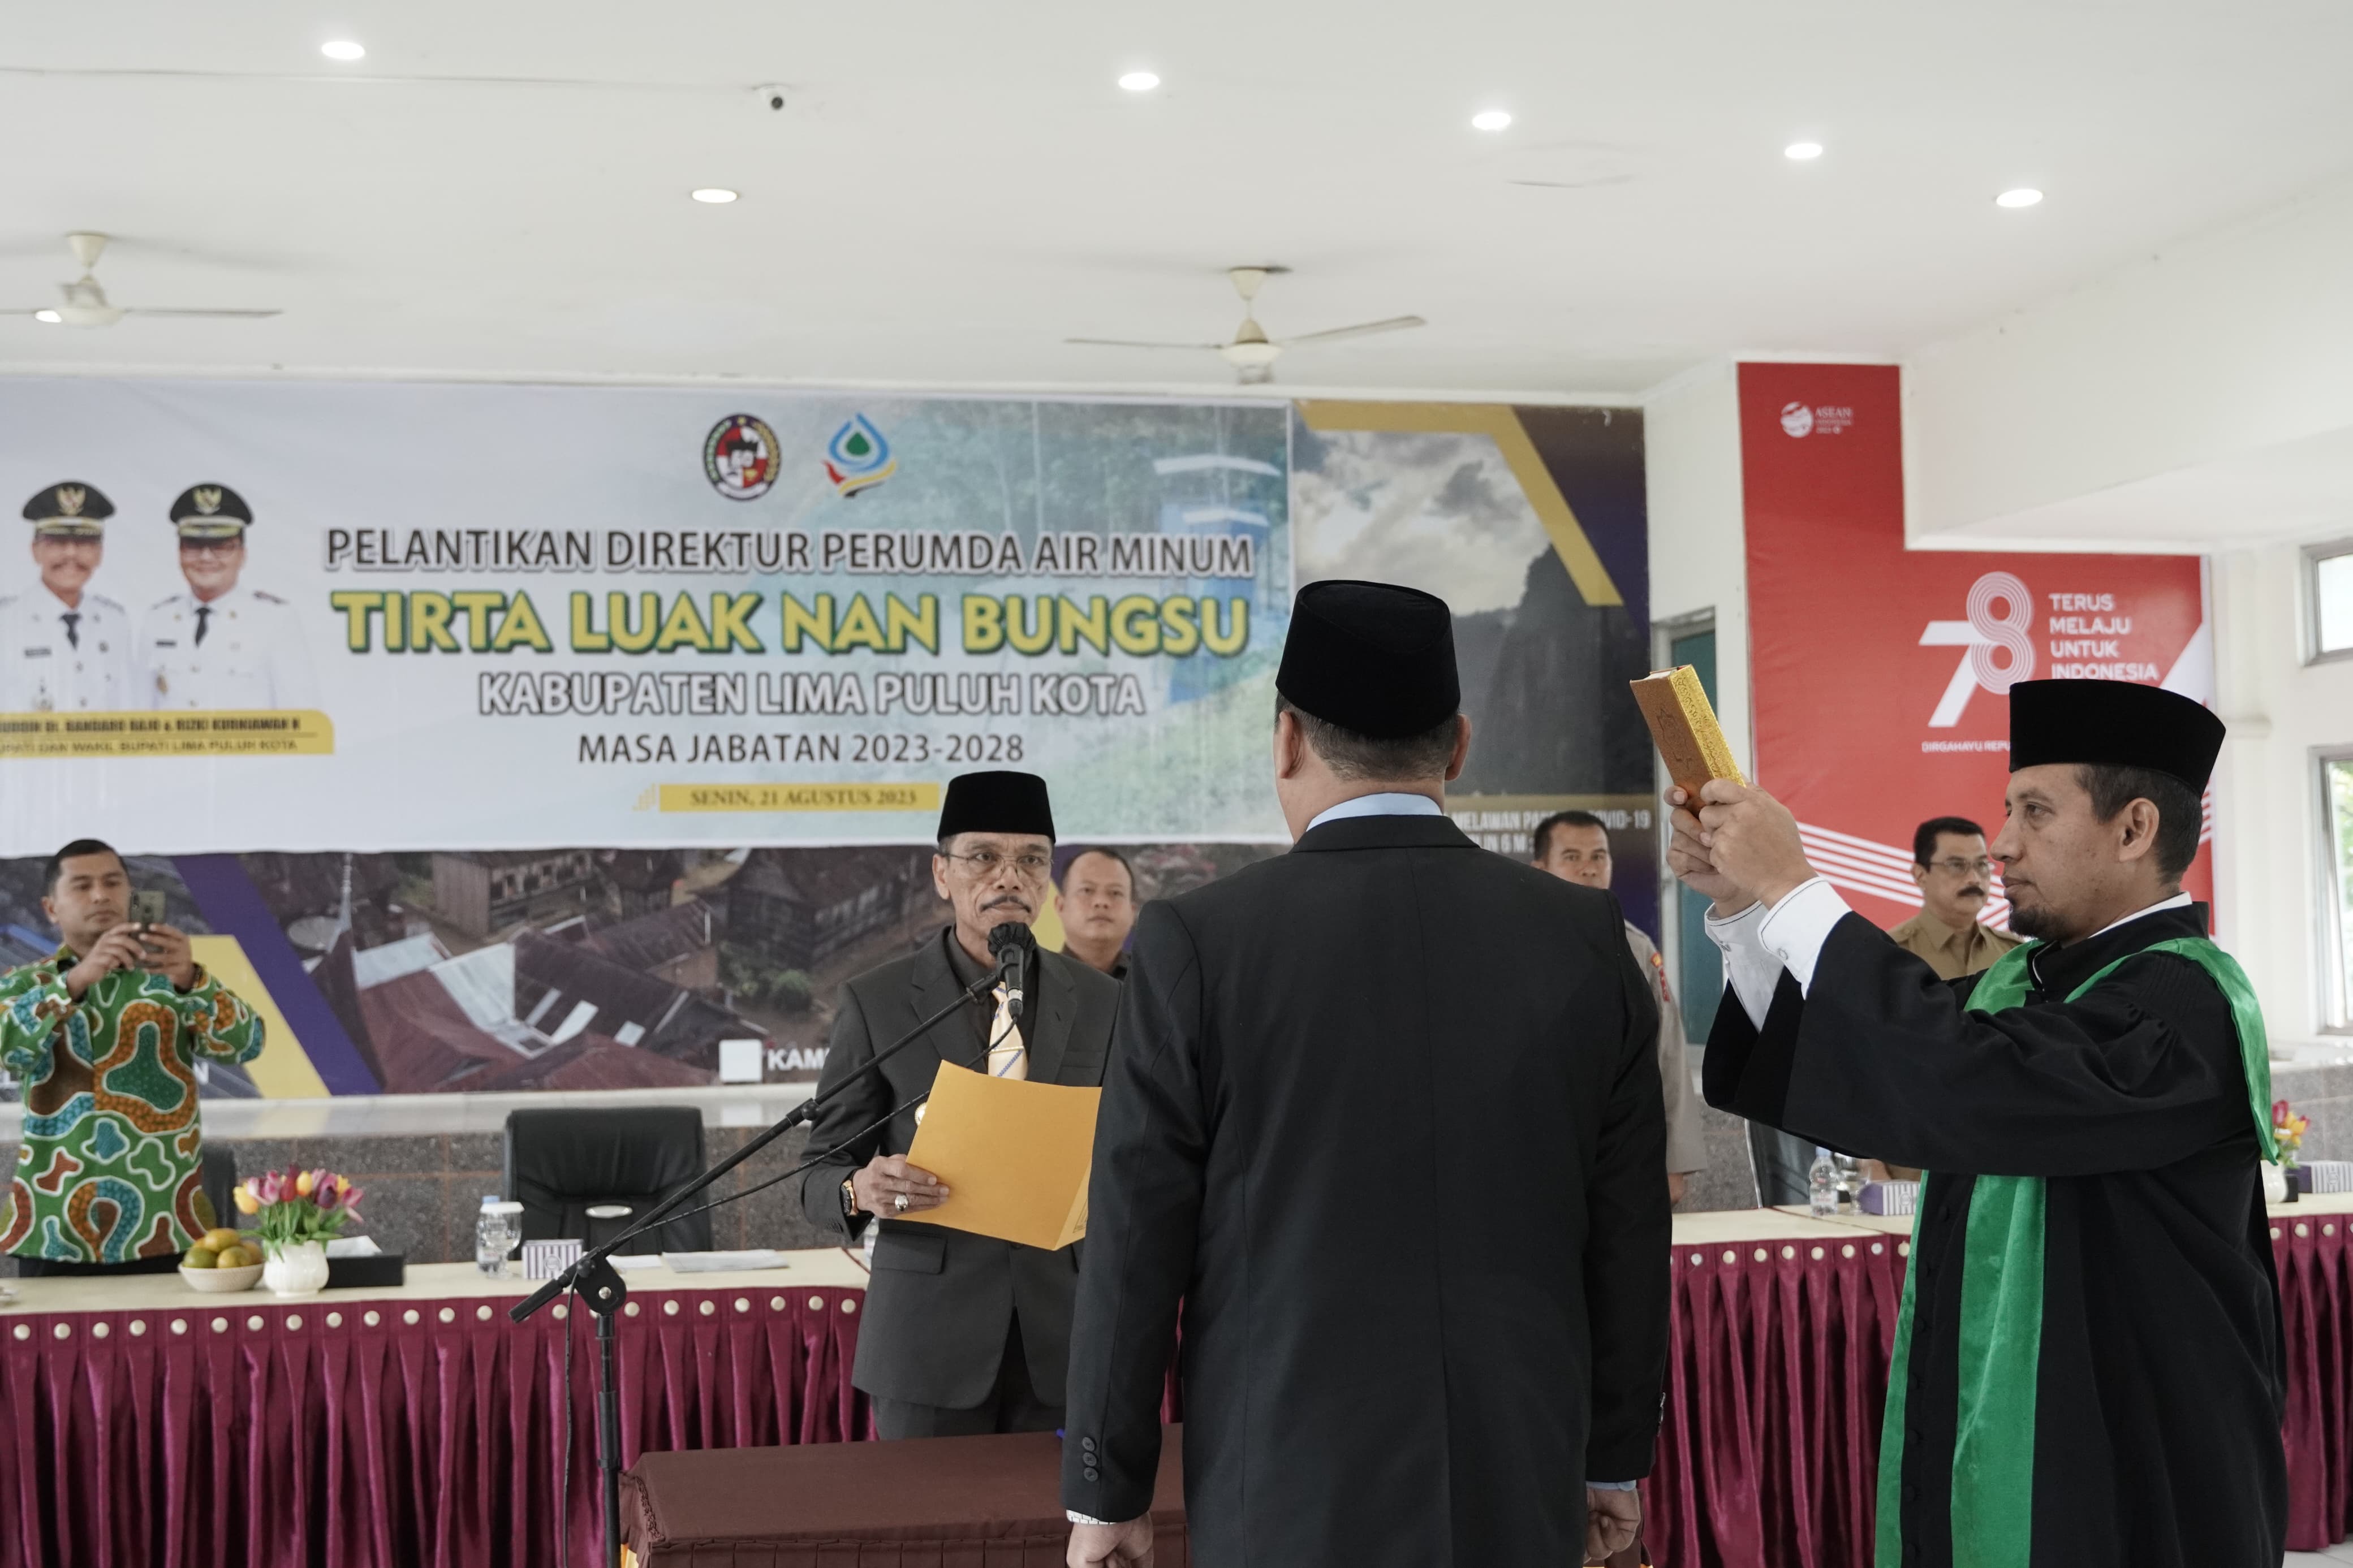 Pelantikan Nofrizen Jabat Dirut PDAM Tirta Luak Nan Bungsu Kabupaten Limapuluh Kota